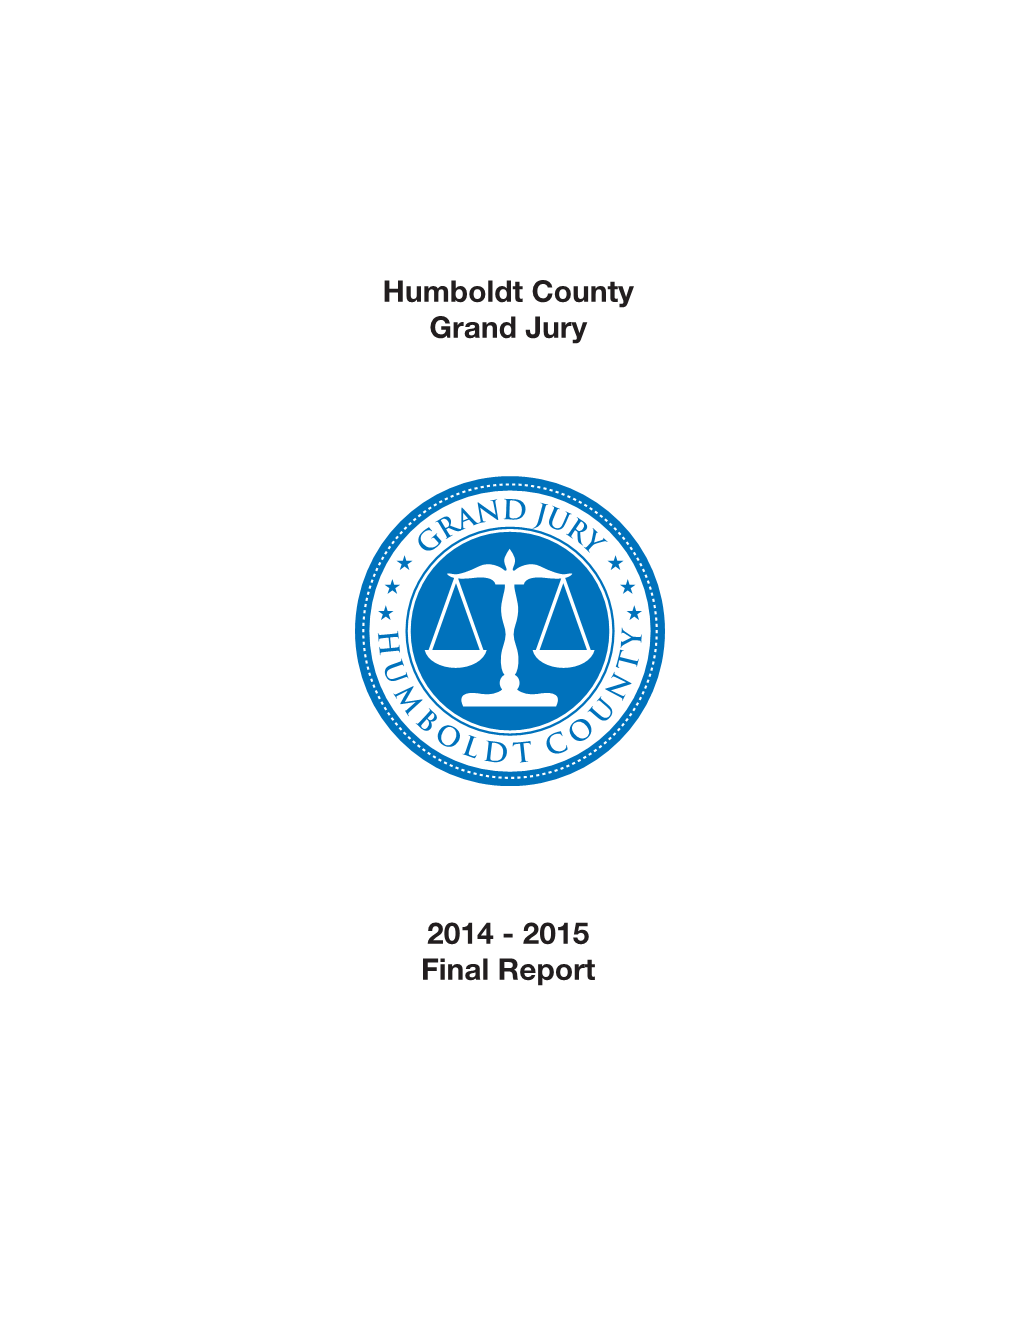 Humboldt County Grand Jury 2014